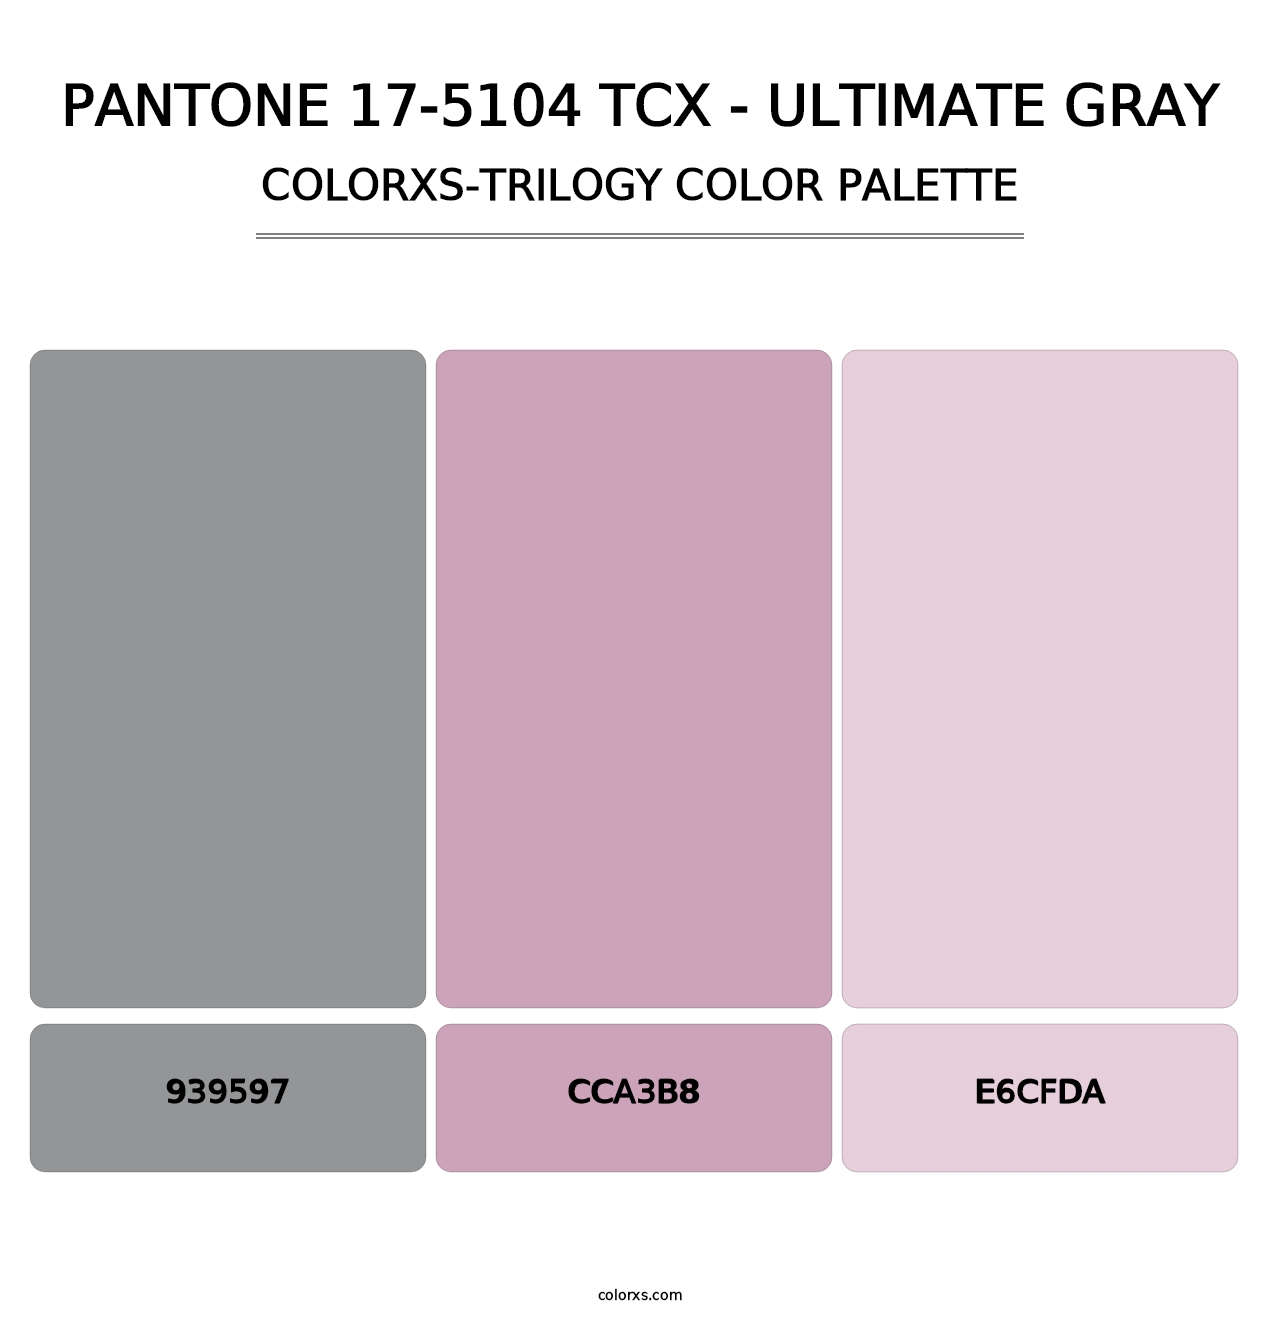 PANTONE 17-5104 TCX - Ultimate Gray - Colorxs Trilogy Palette